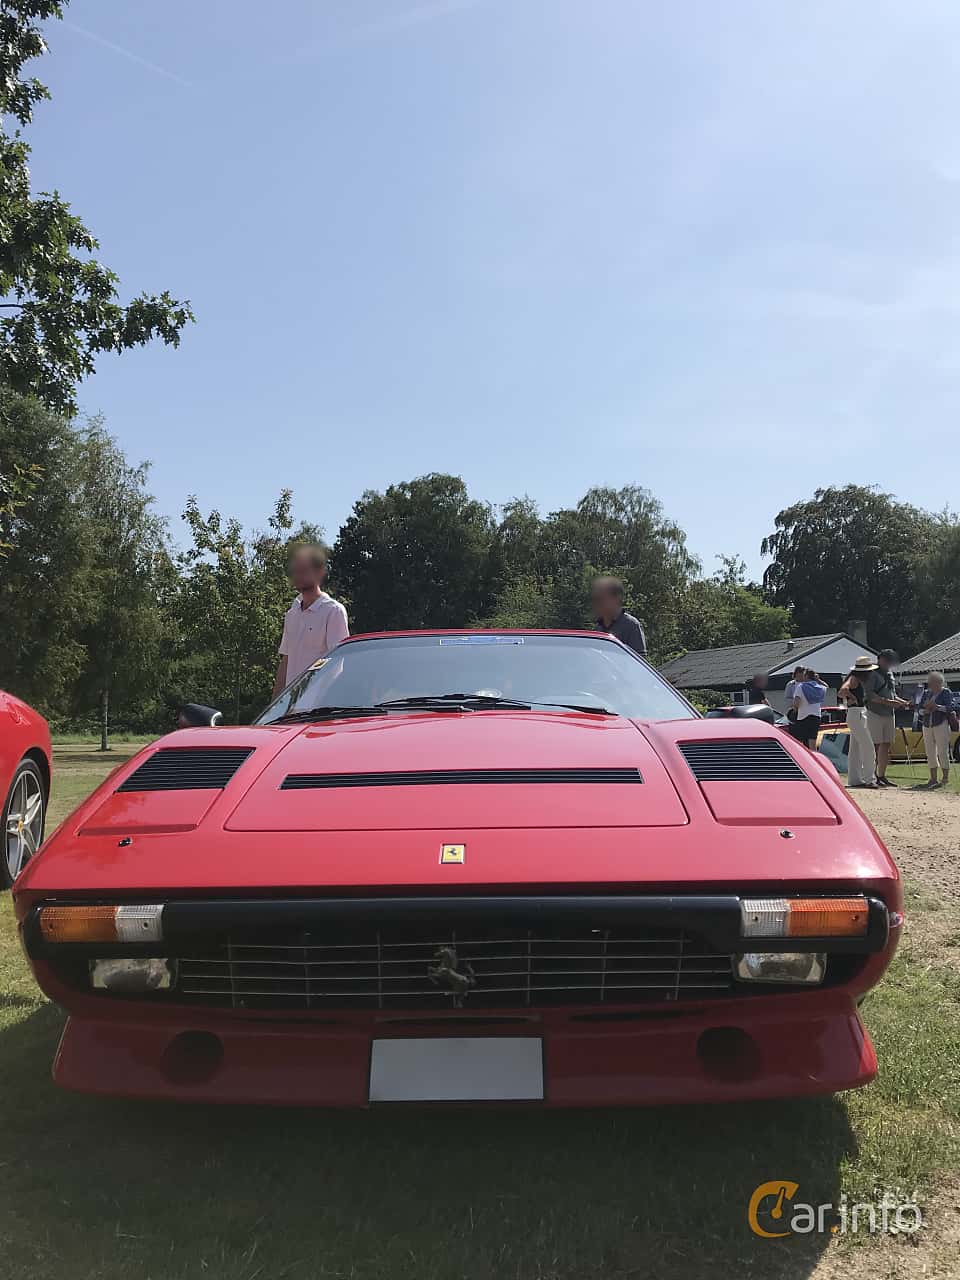 User Images Of Ferrari 308 Gts 1st Generation